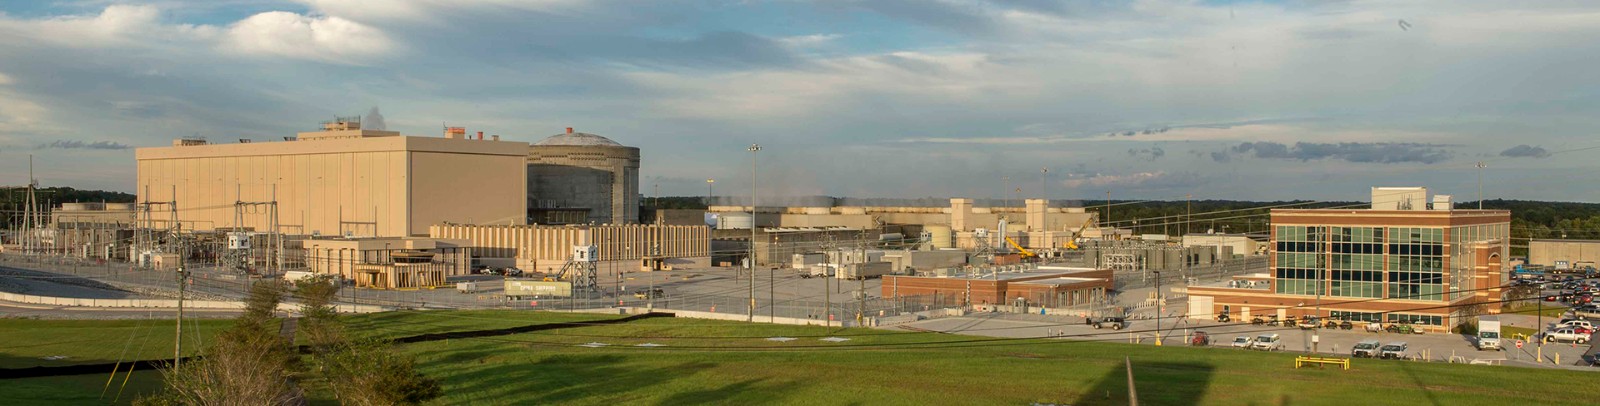 Farley nuclear power plant